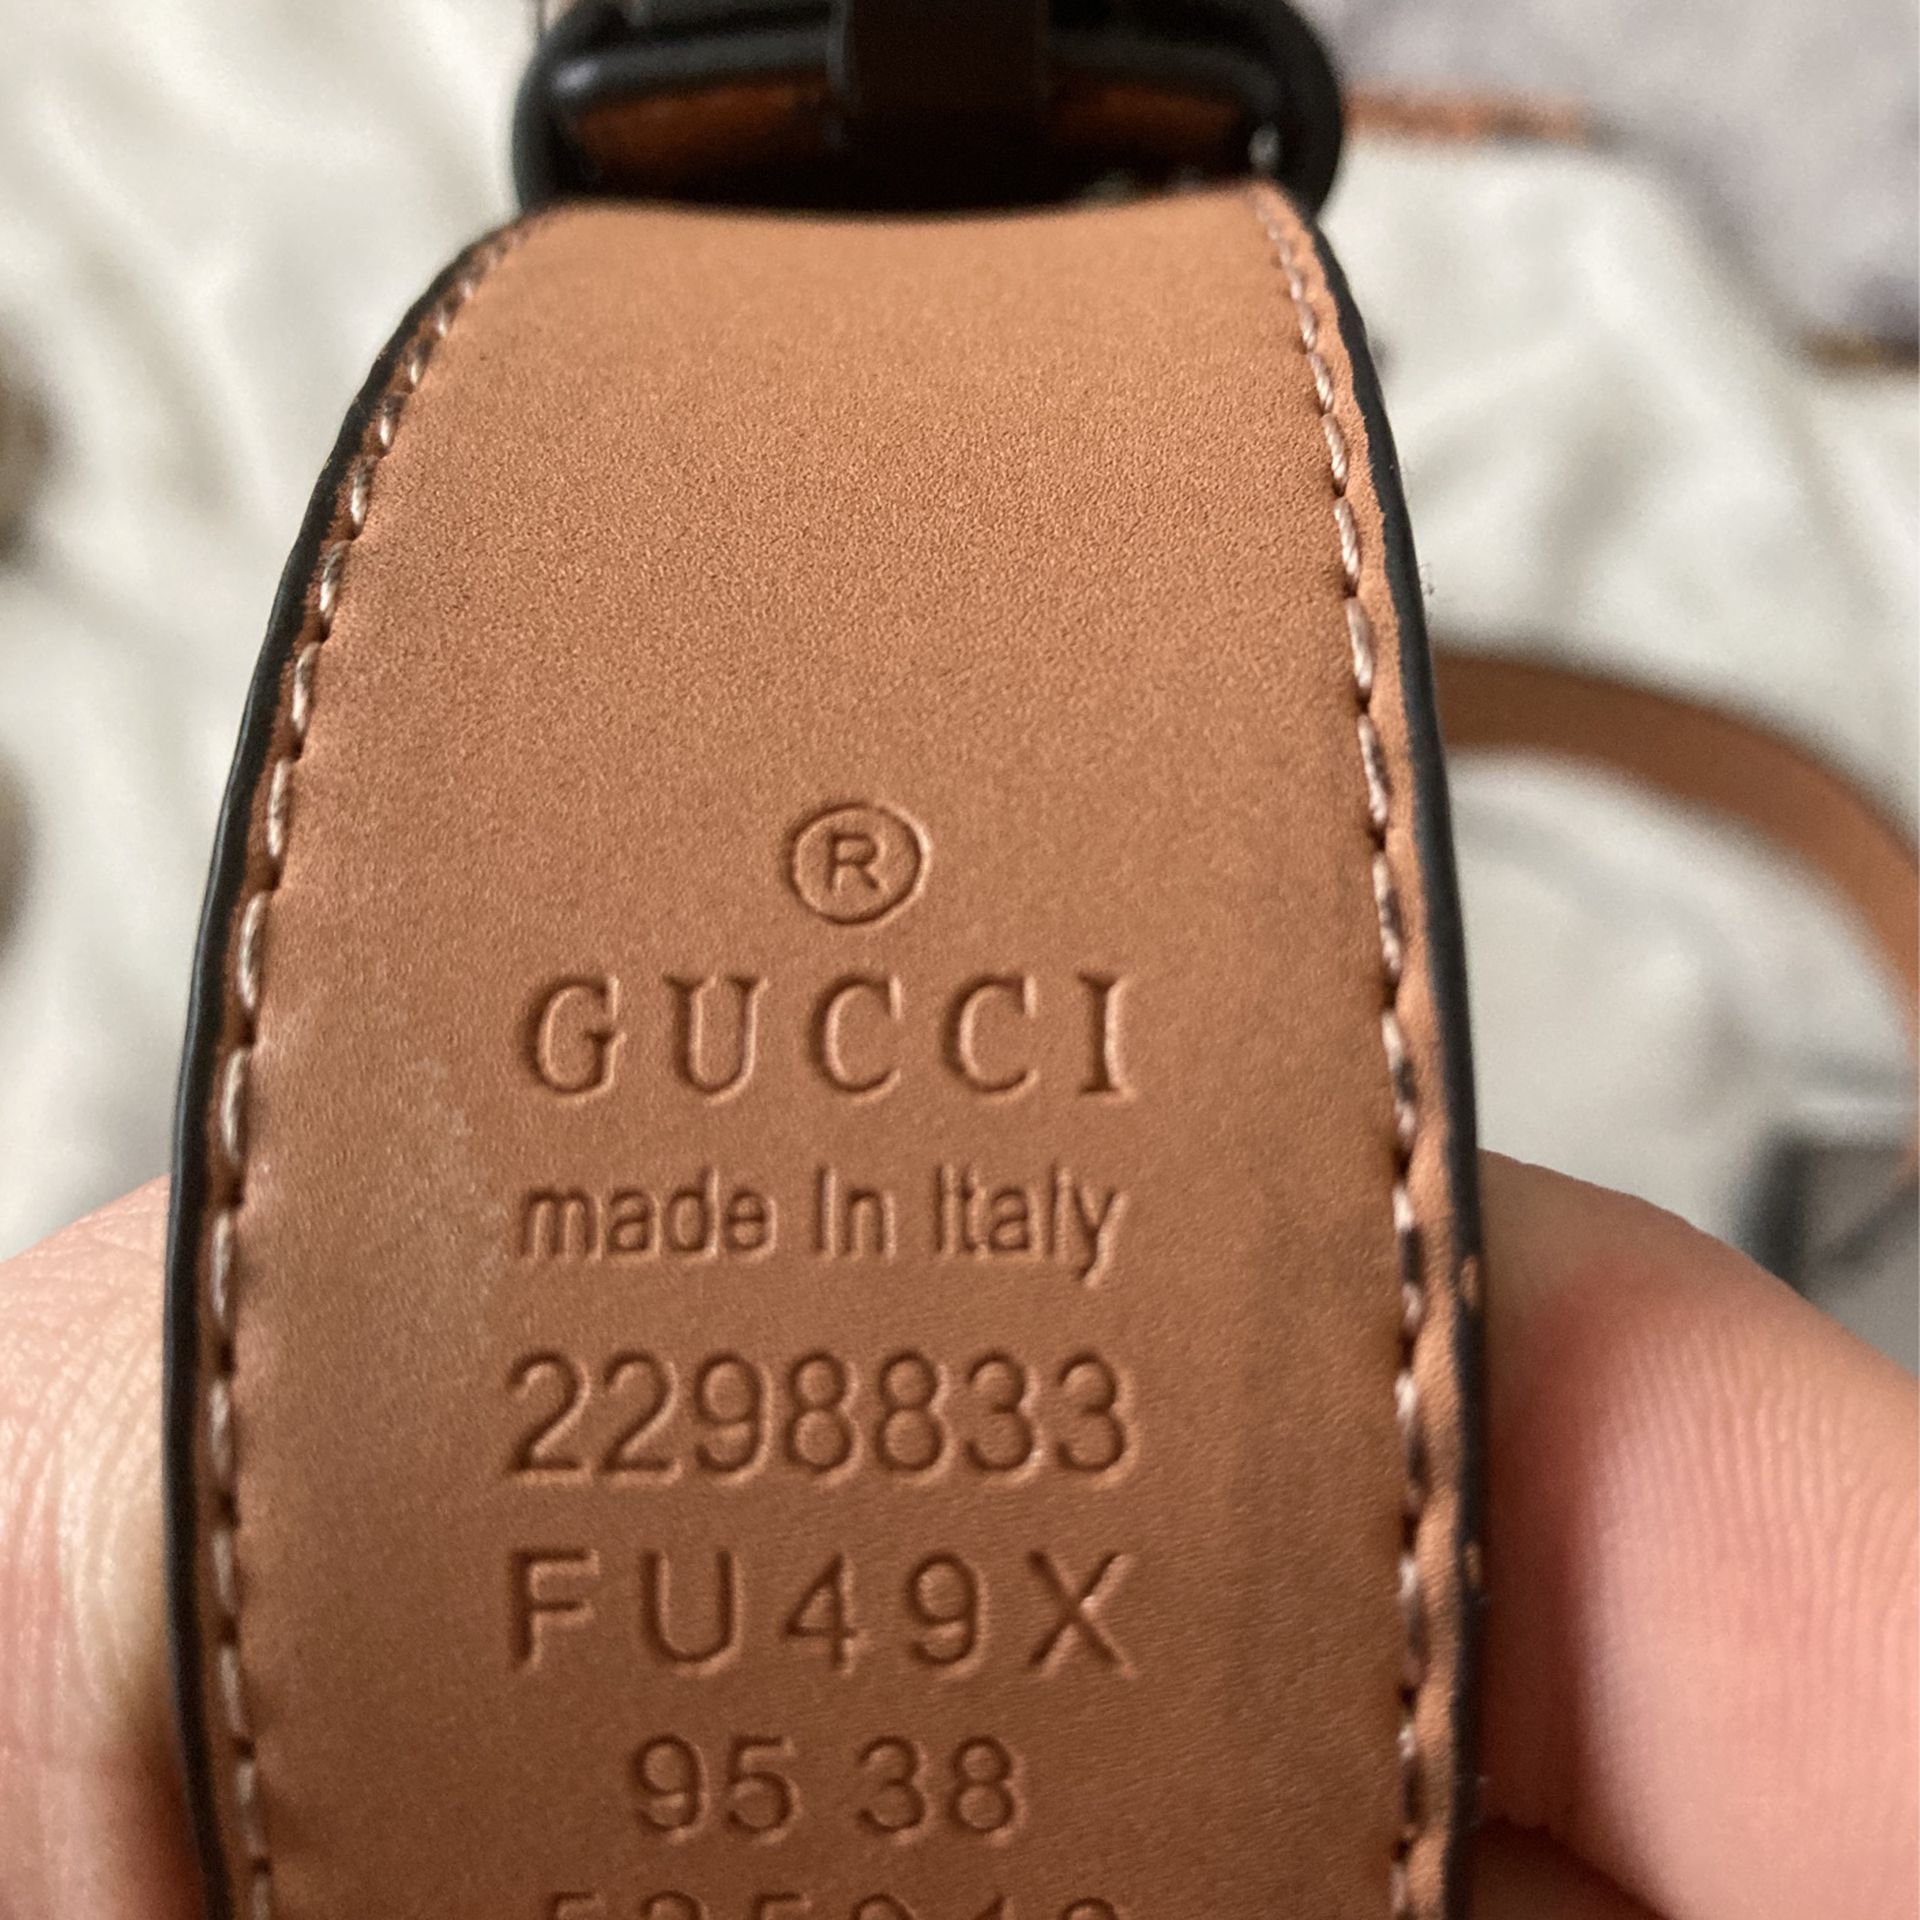 Gucci Belts for sale in Las Vegas, Nevada